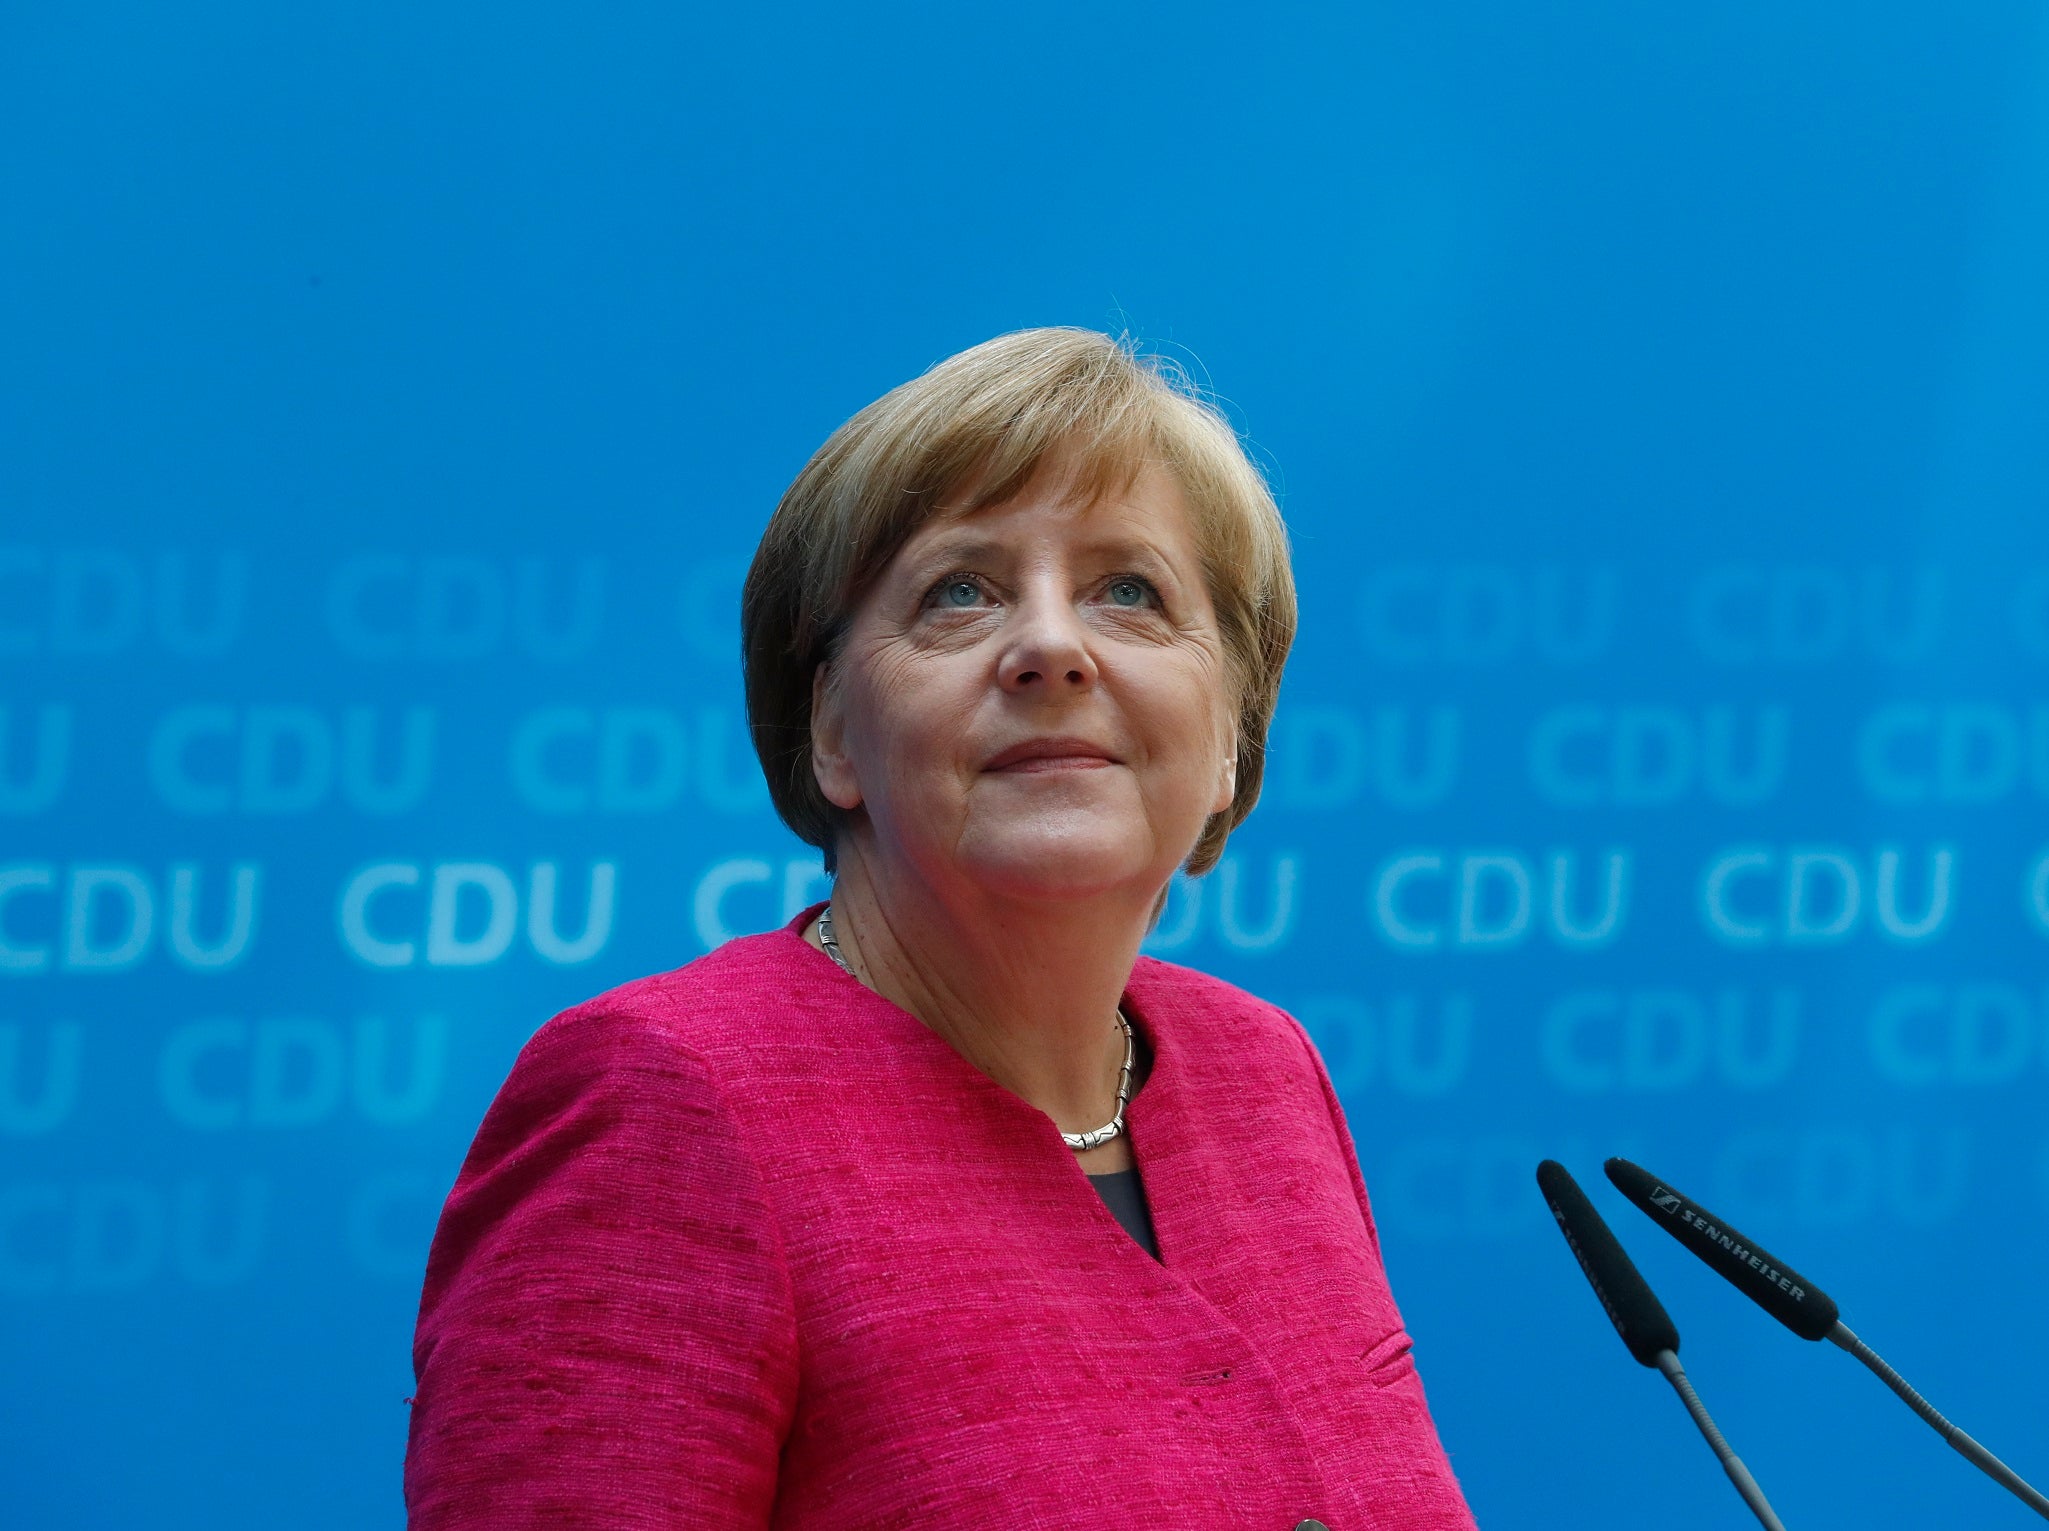 Angela Merkel addressed German-Turkish relations during a press conference in Berlin